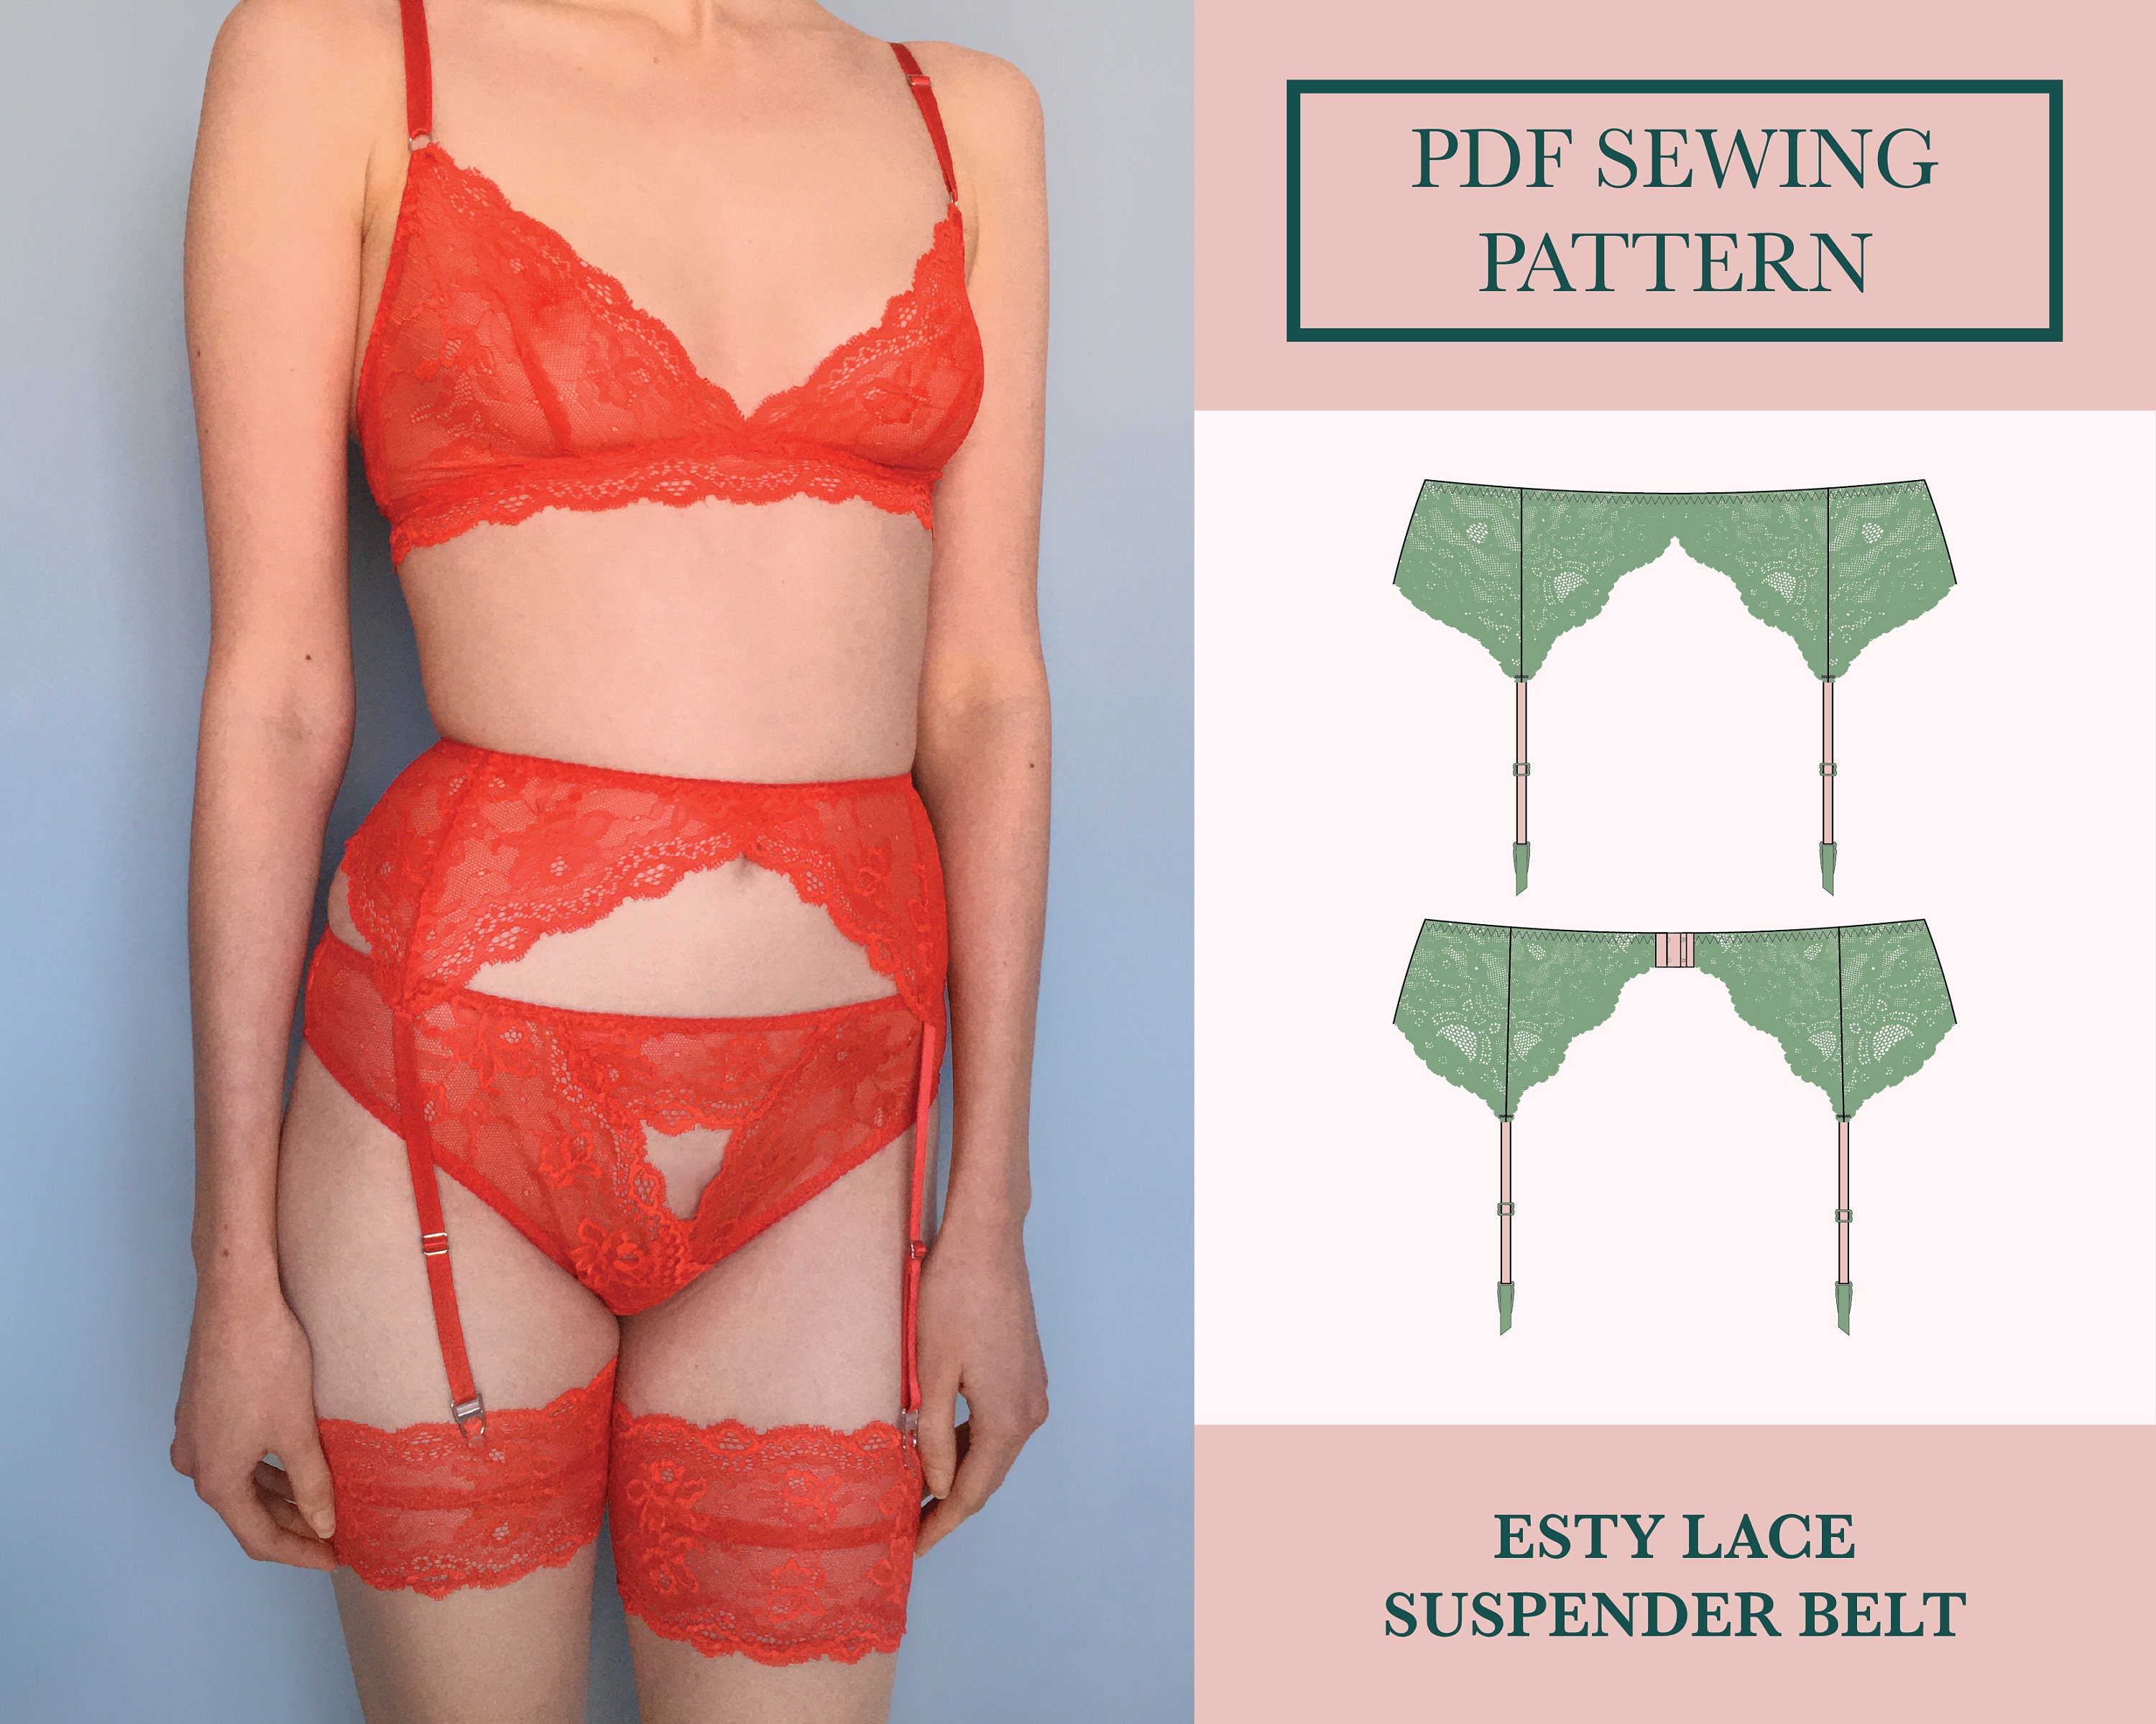 Lace Suspender Belt Sewing Pattern Skimpy Style Garter Belt PDF Download  Stretch Galloon Lace Hold-up Belt Pattern UK 6-18 